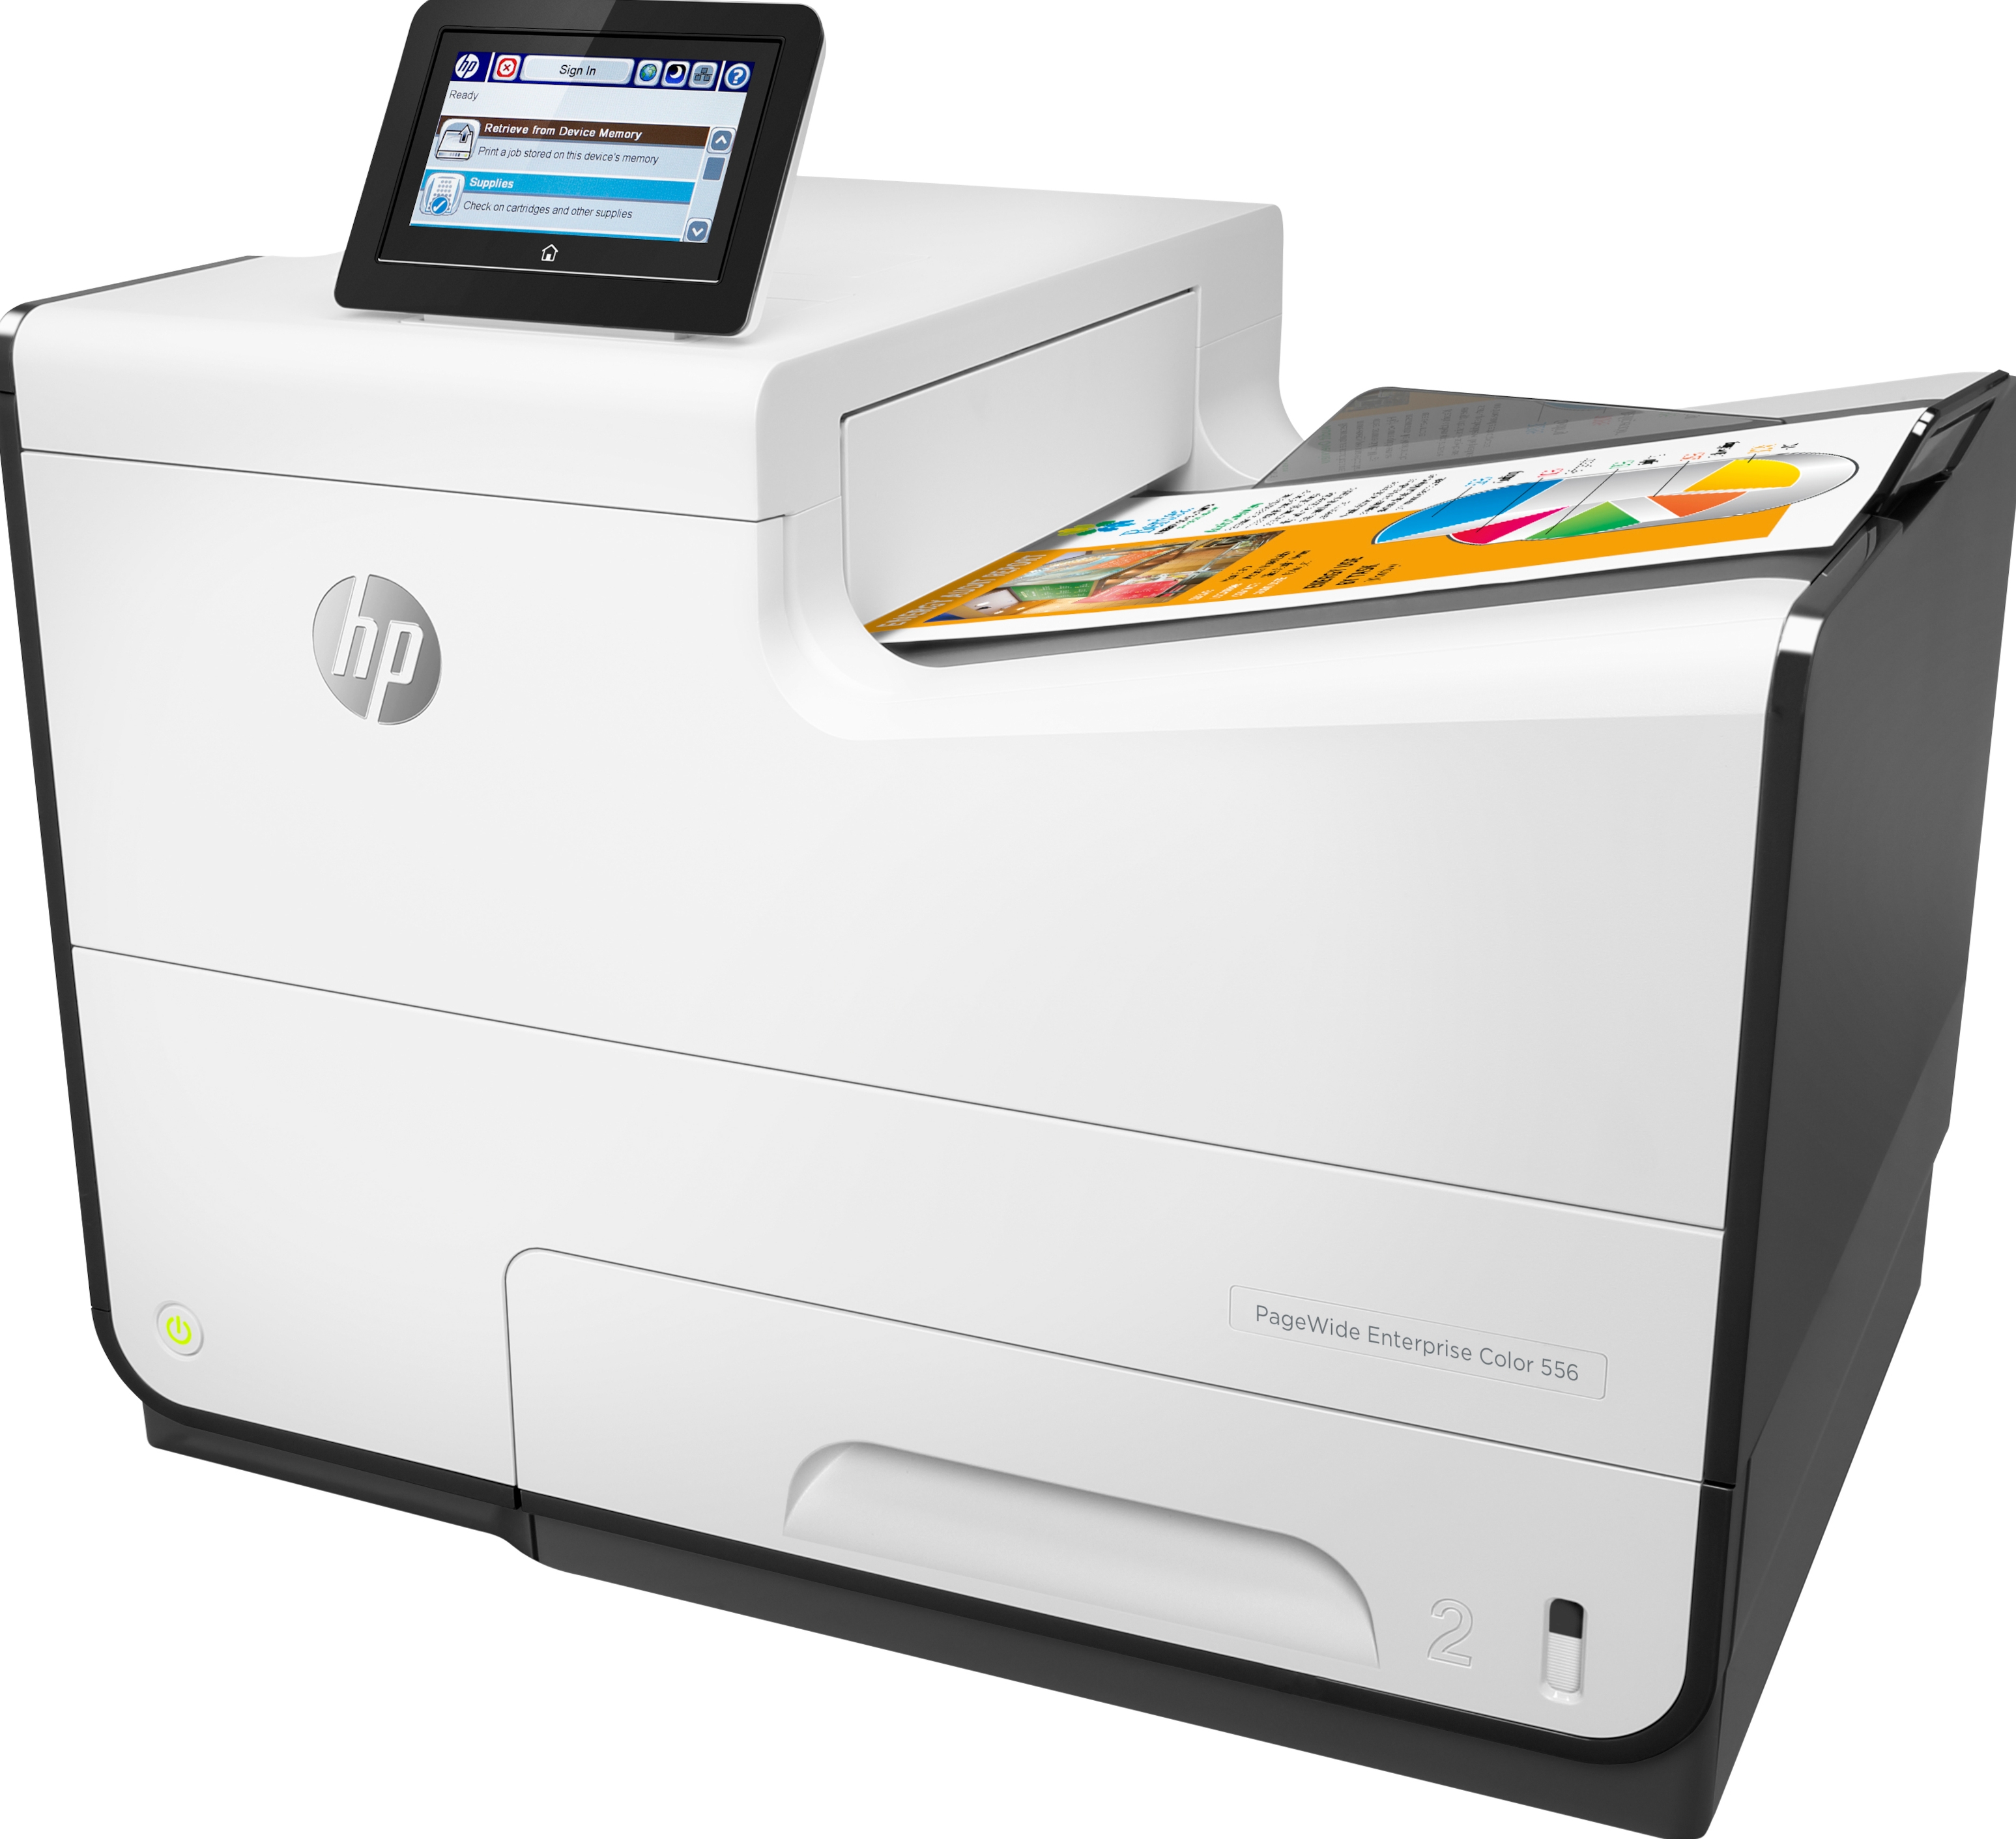 HP PageWide Enterprise Color 556dn - Printer